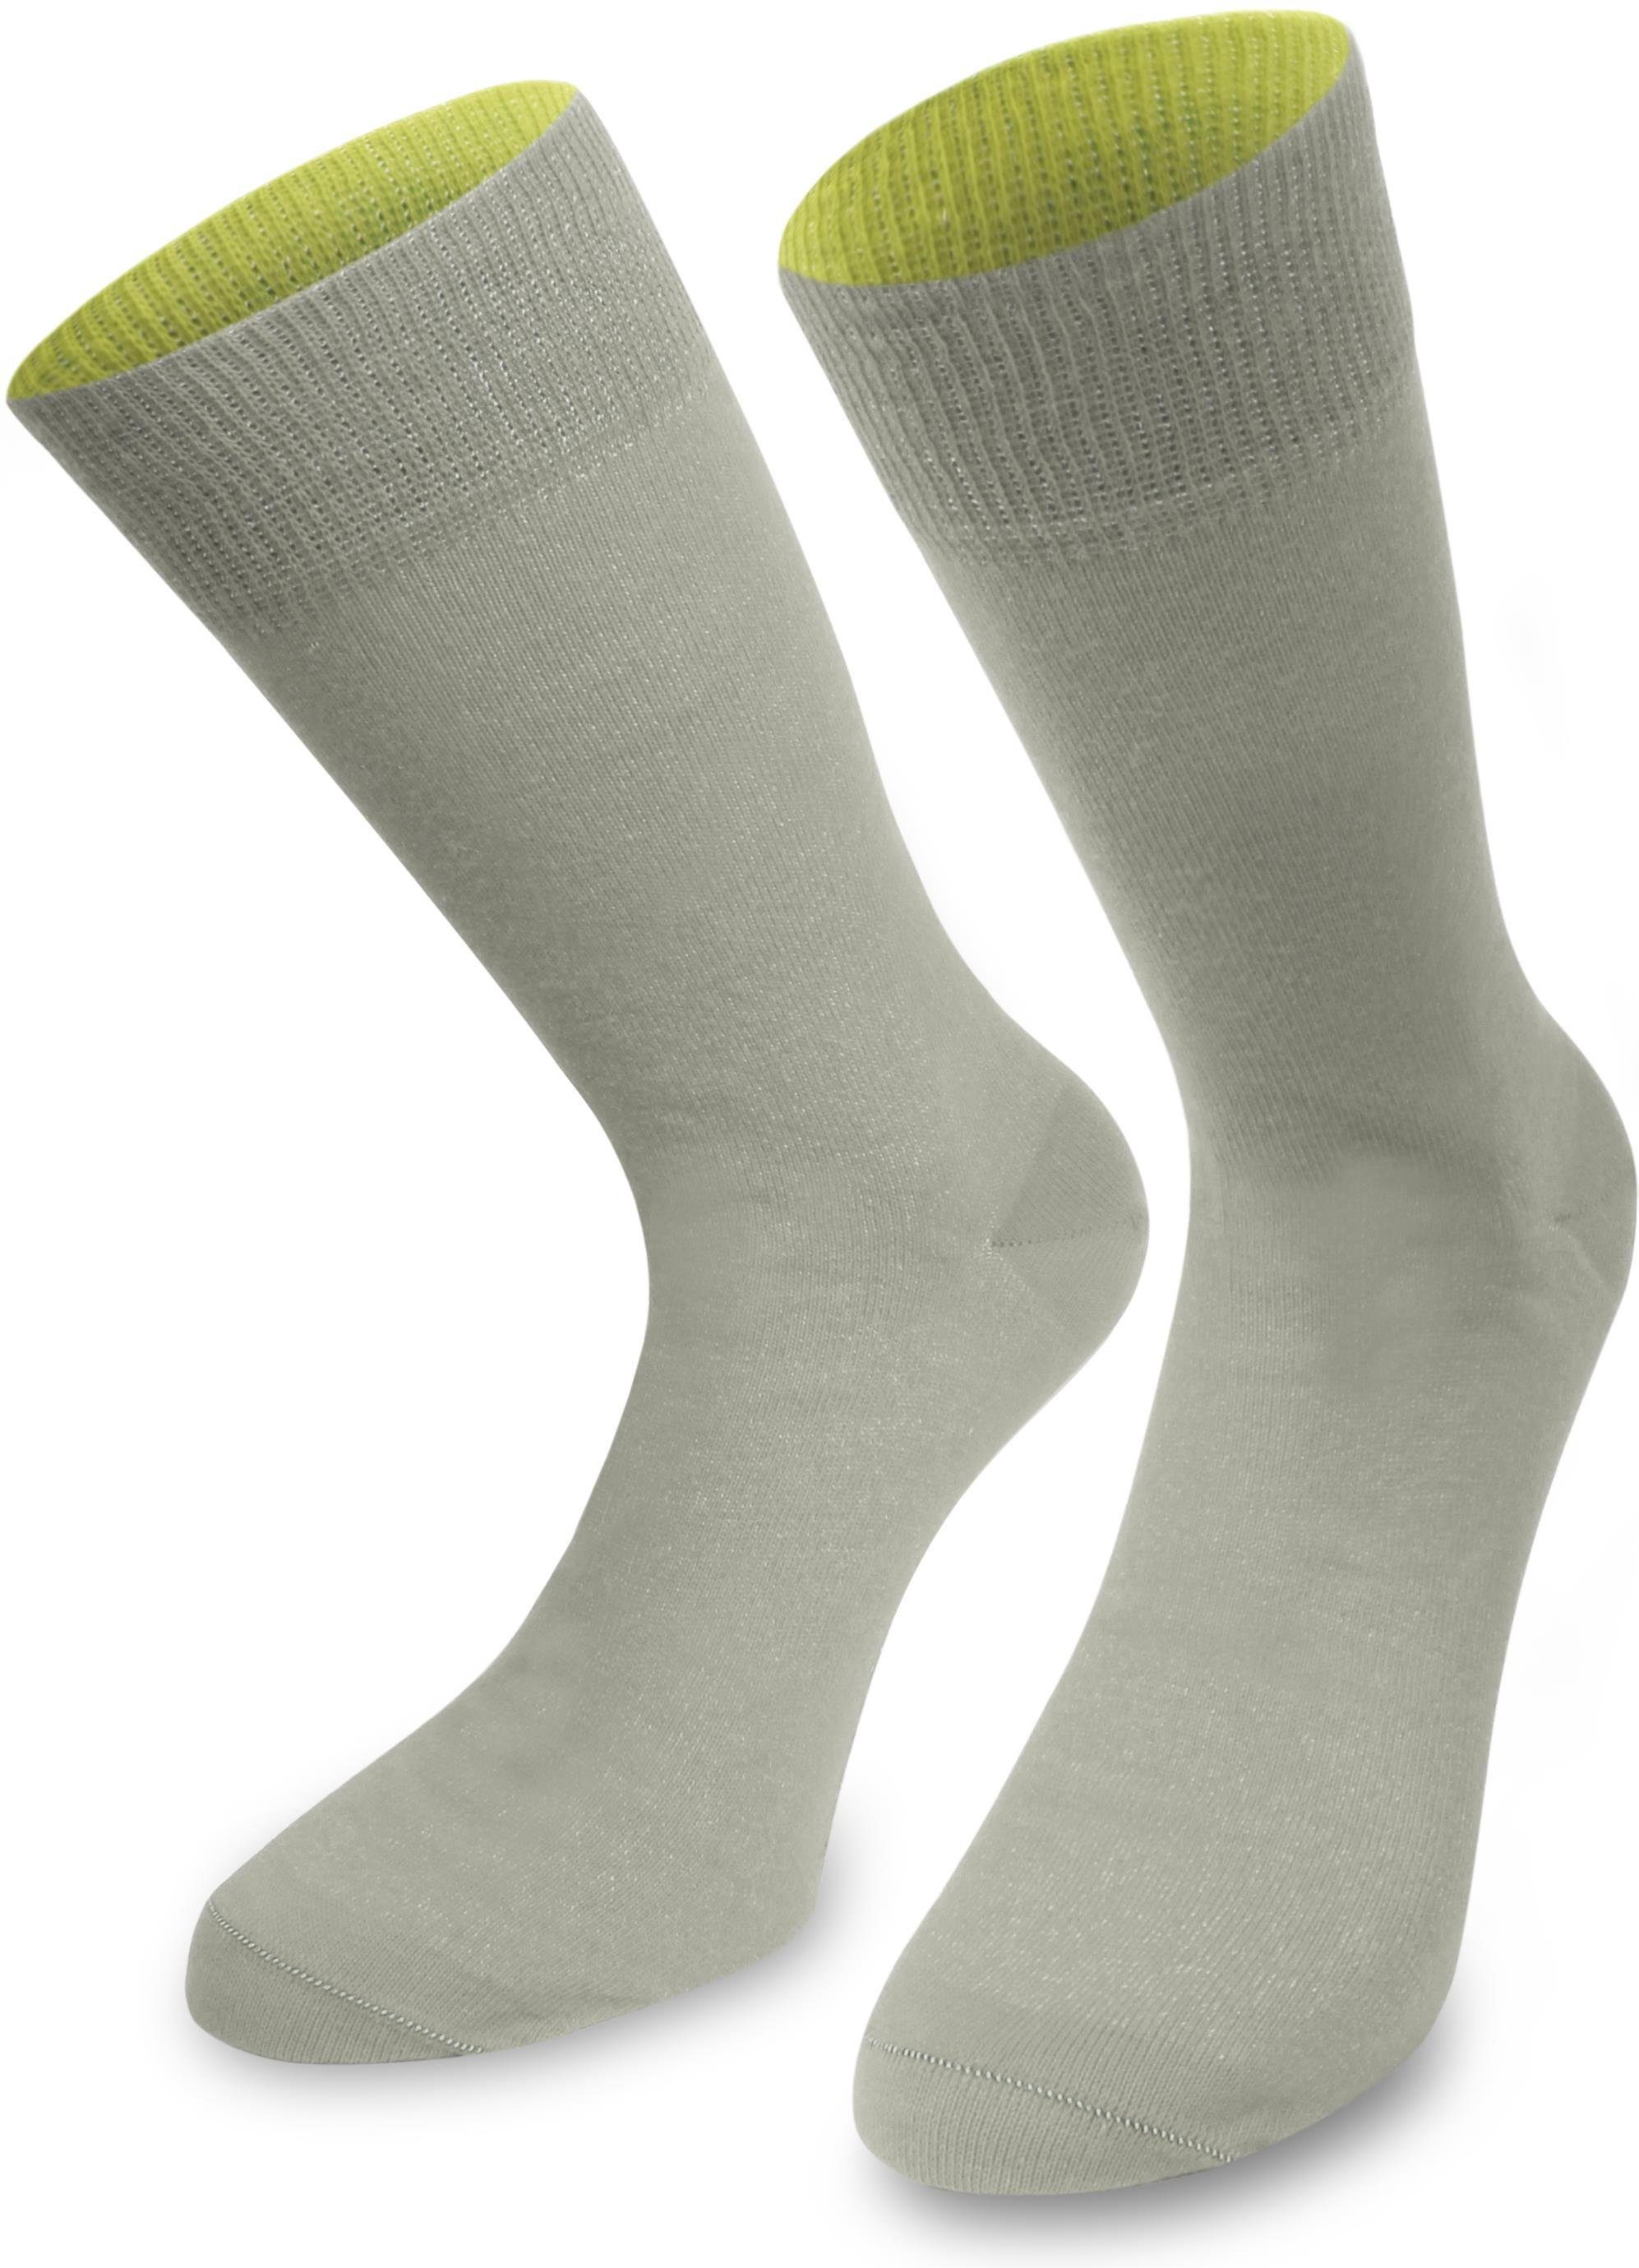 normani Basicsocken 1 Paar Socken Bi-Color (1 Paar) farbig abgesetzter Bund Silber/Säuregelb